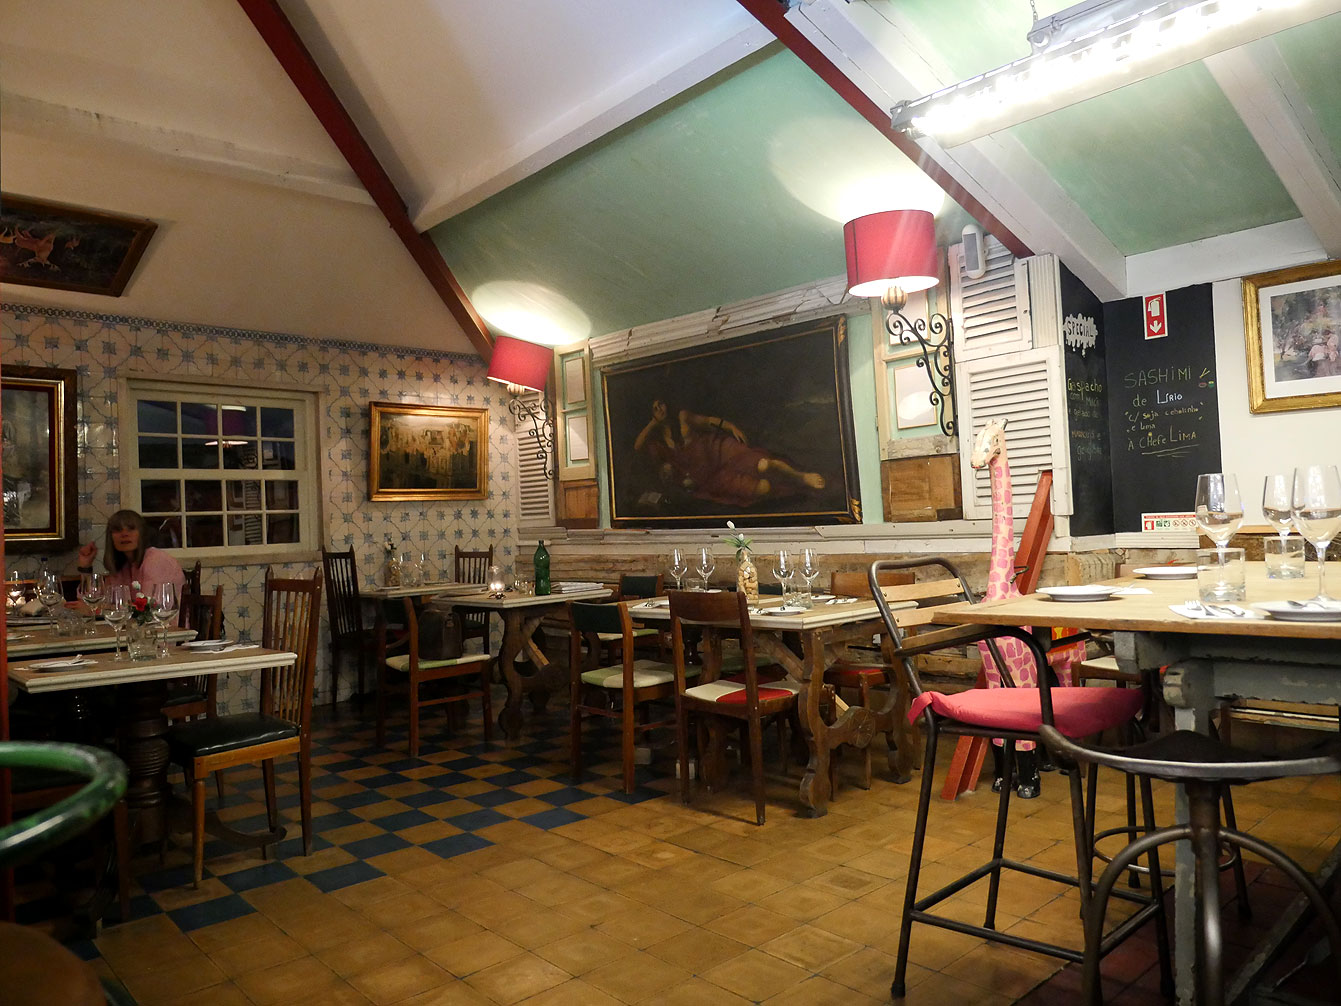 Lisbonne, the insolito, restaurant